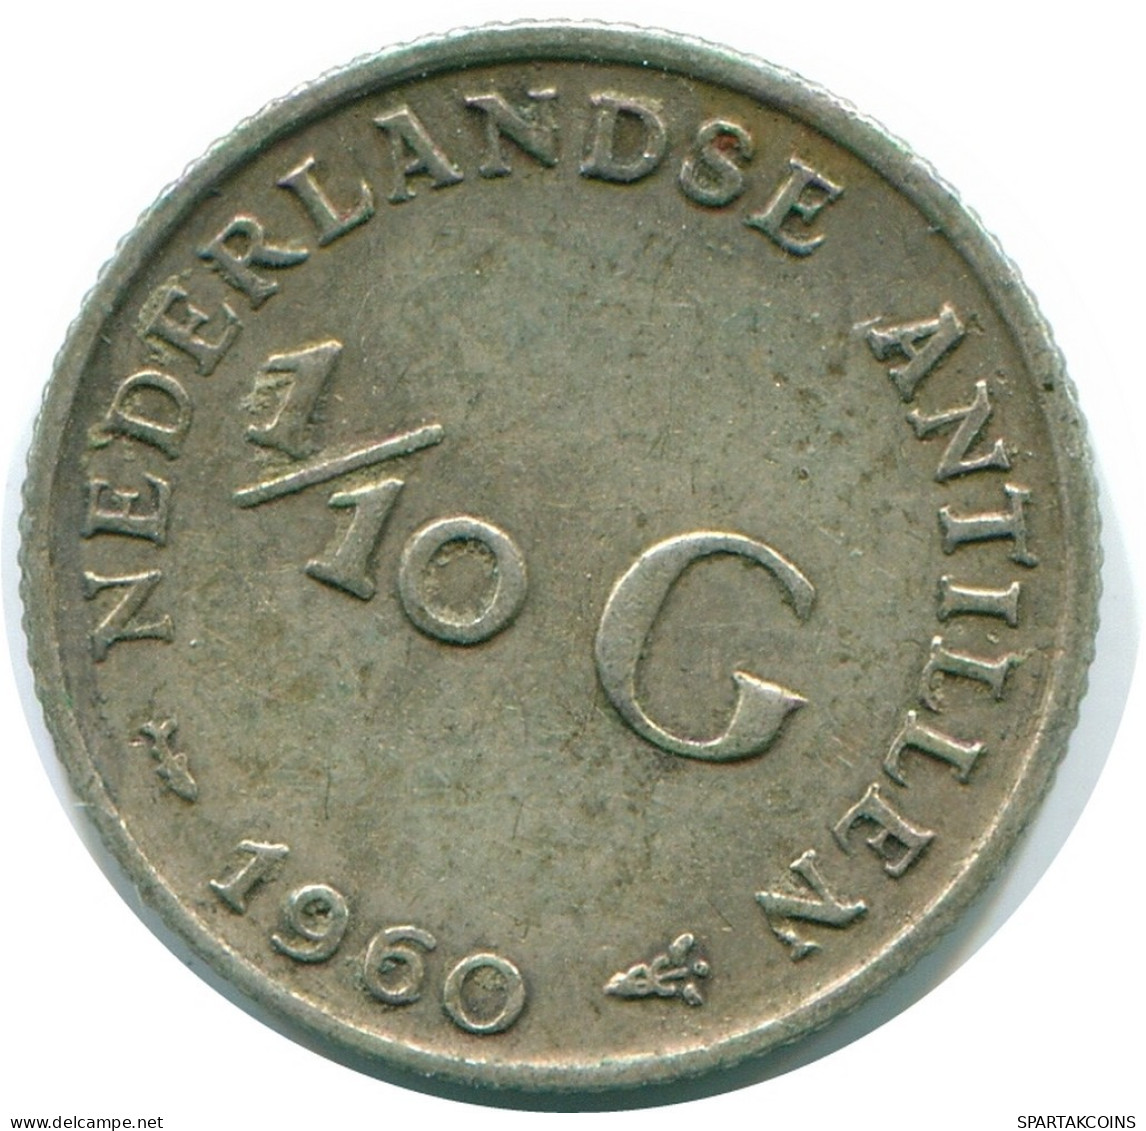 1/10 GULDEN 1960 NIEDERLÄNDISCHE ANTILLEN SILBER Koloniale Münze #NL12284.3.D.A - Netherlands Antilles